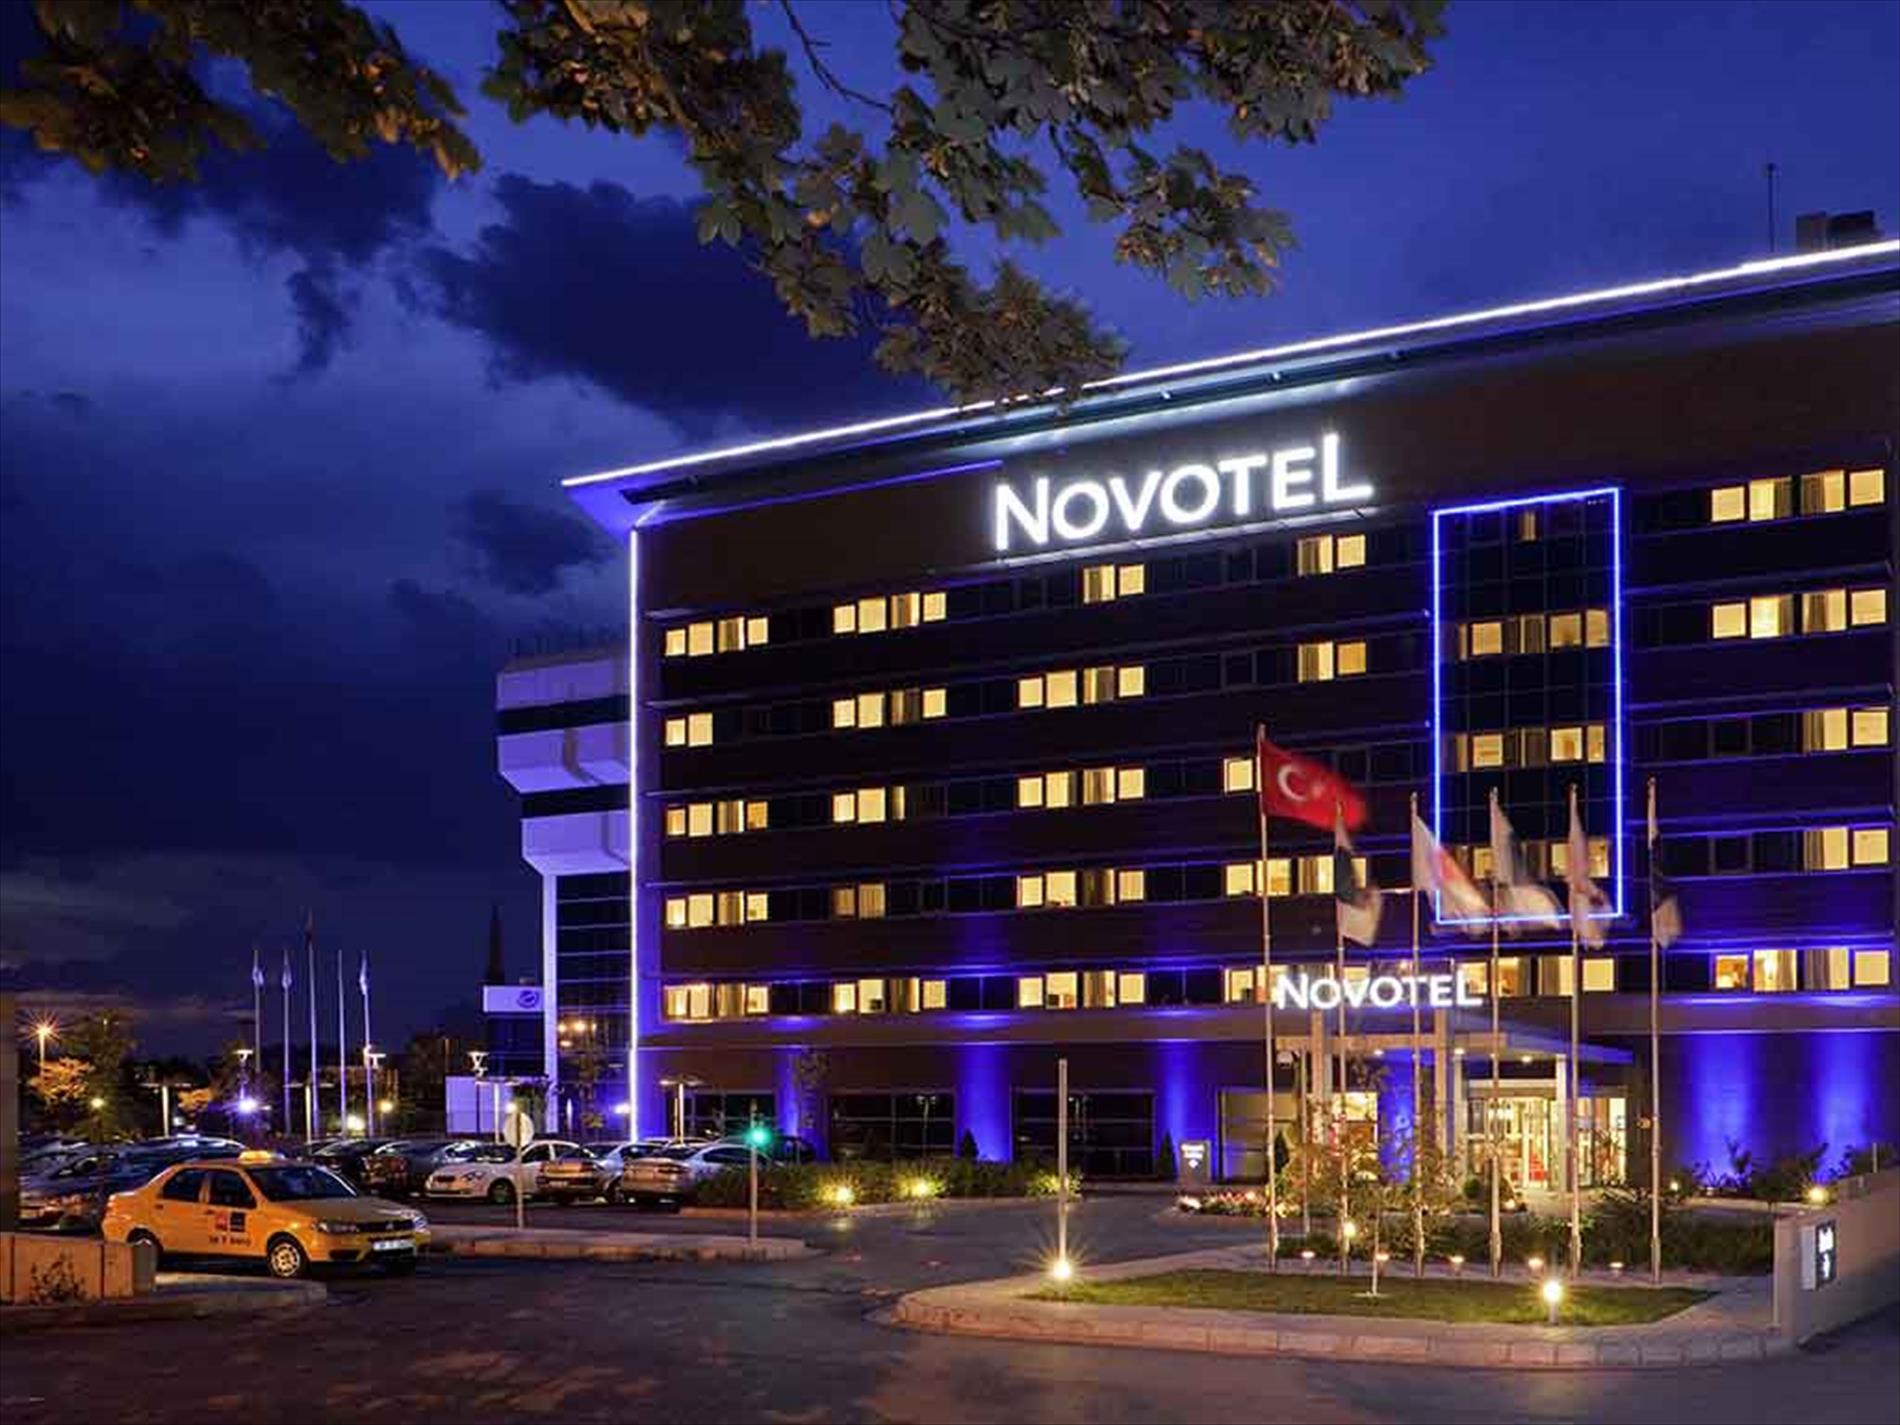 Novotel, Ibis Hotel